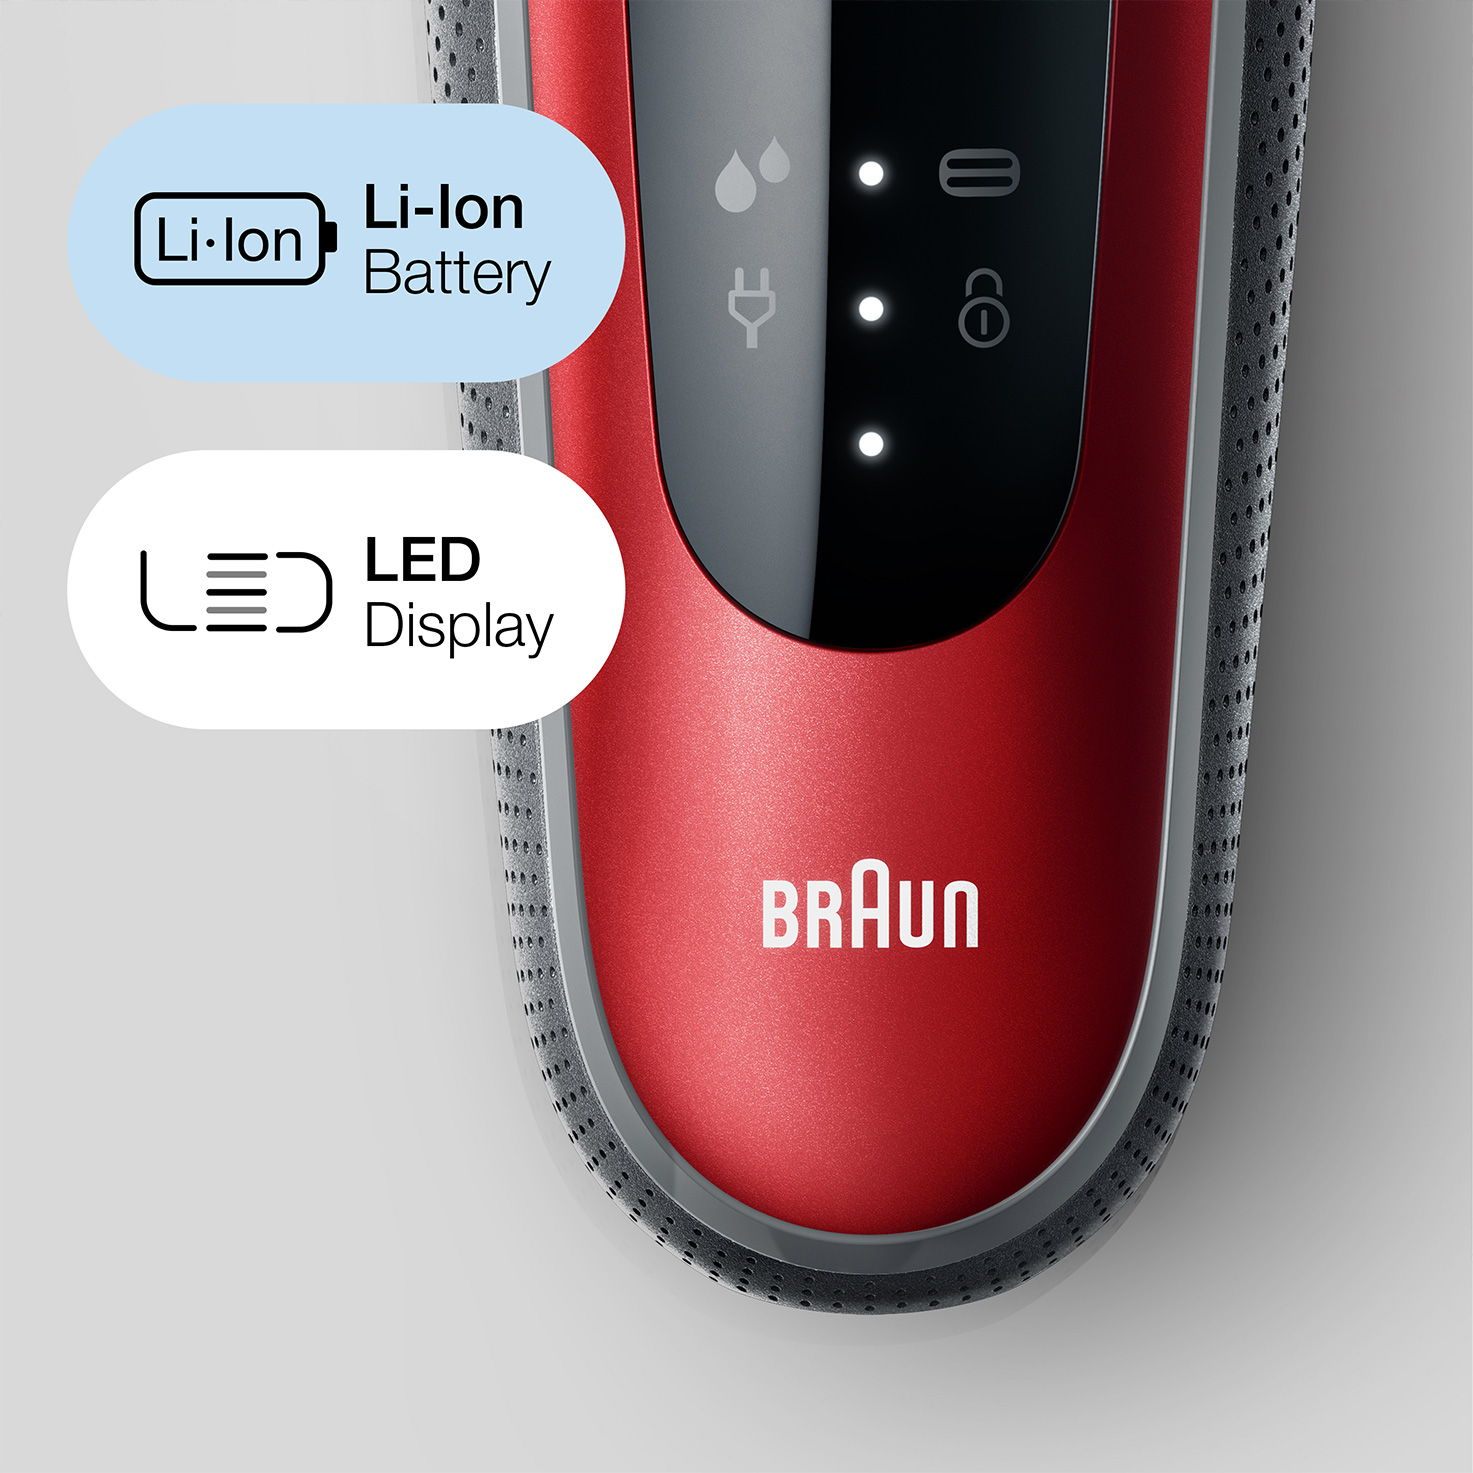 li-ion battery, LED Display